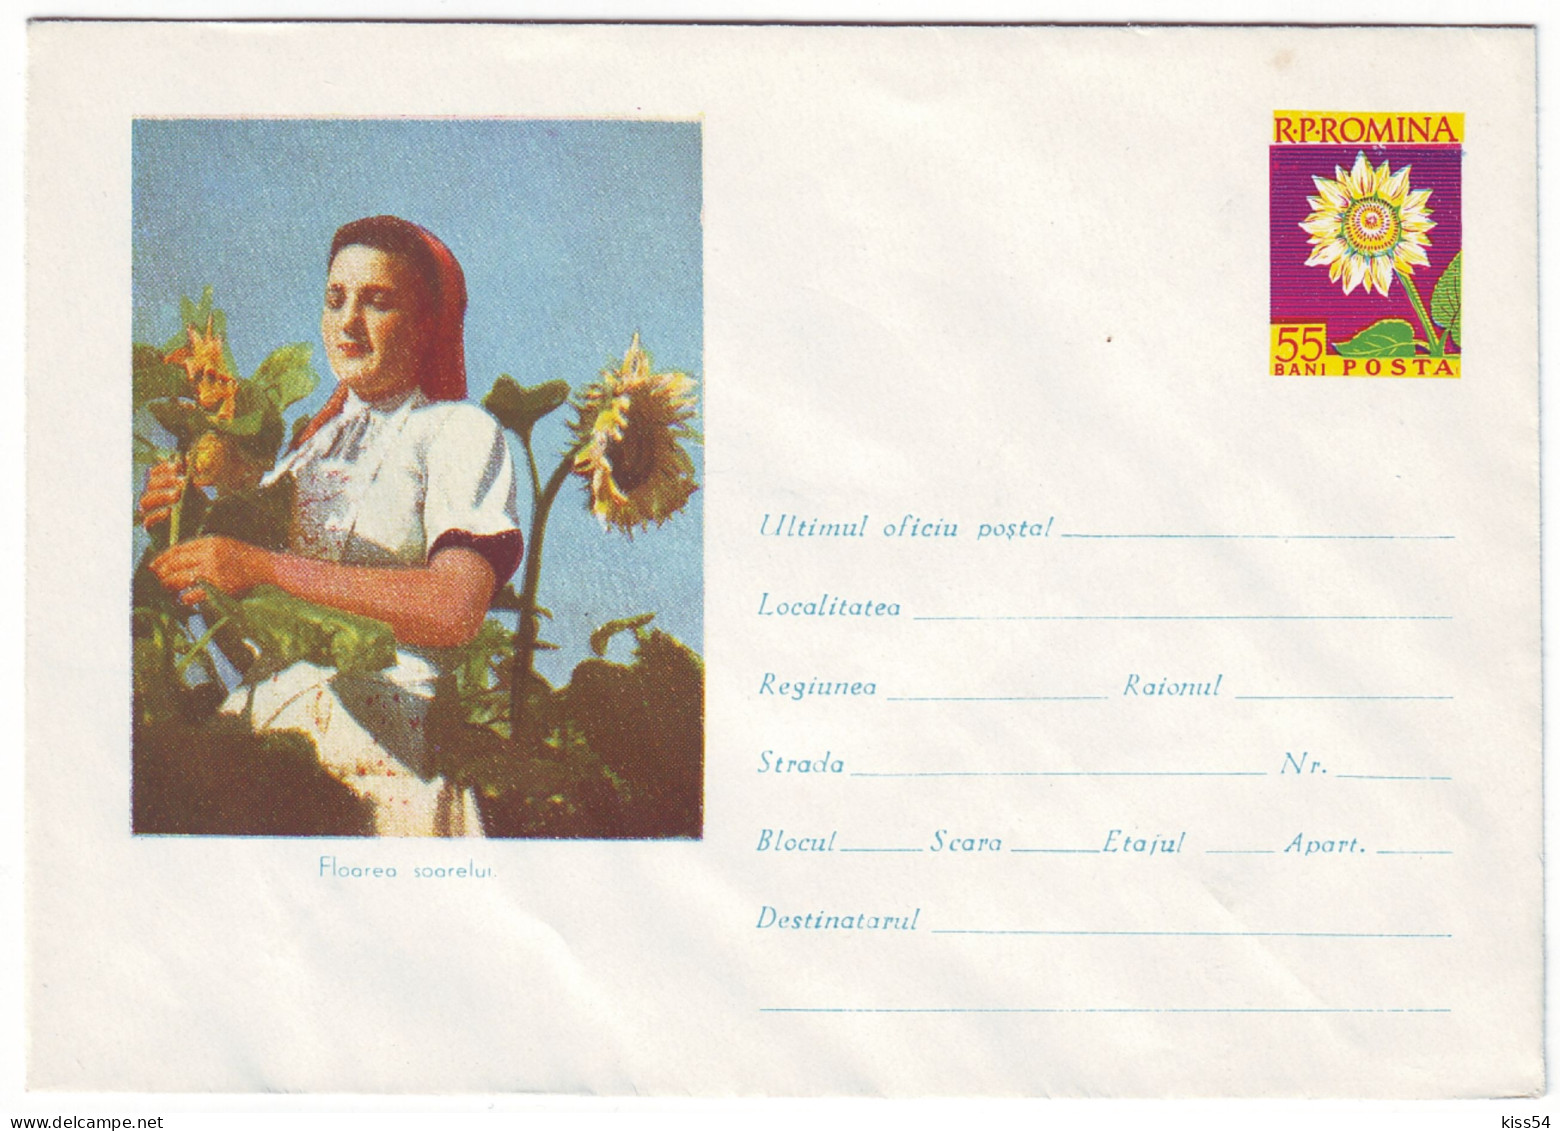 IP 61 - 495d AGRICULTURE & SUN FLOWER, Romania - Stationery - Unused - 1961 - Postal Stationery